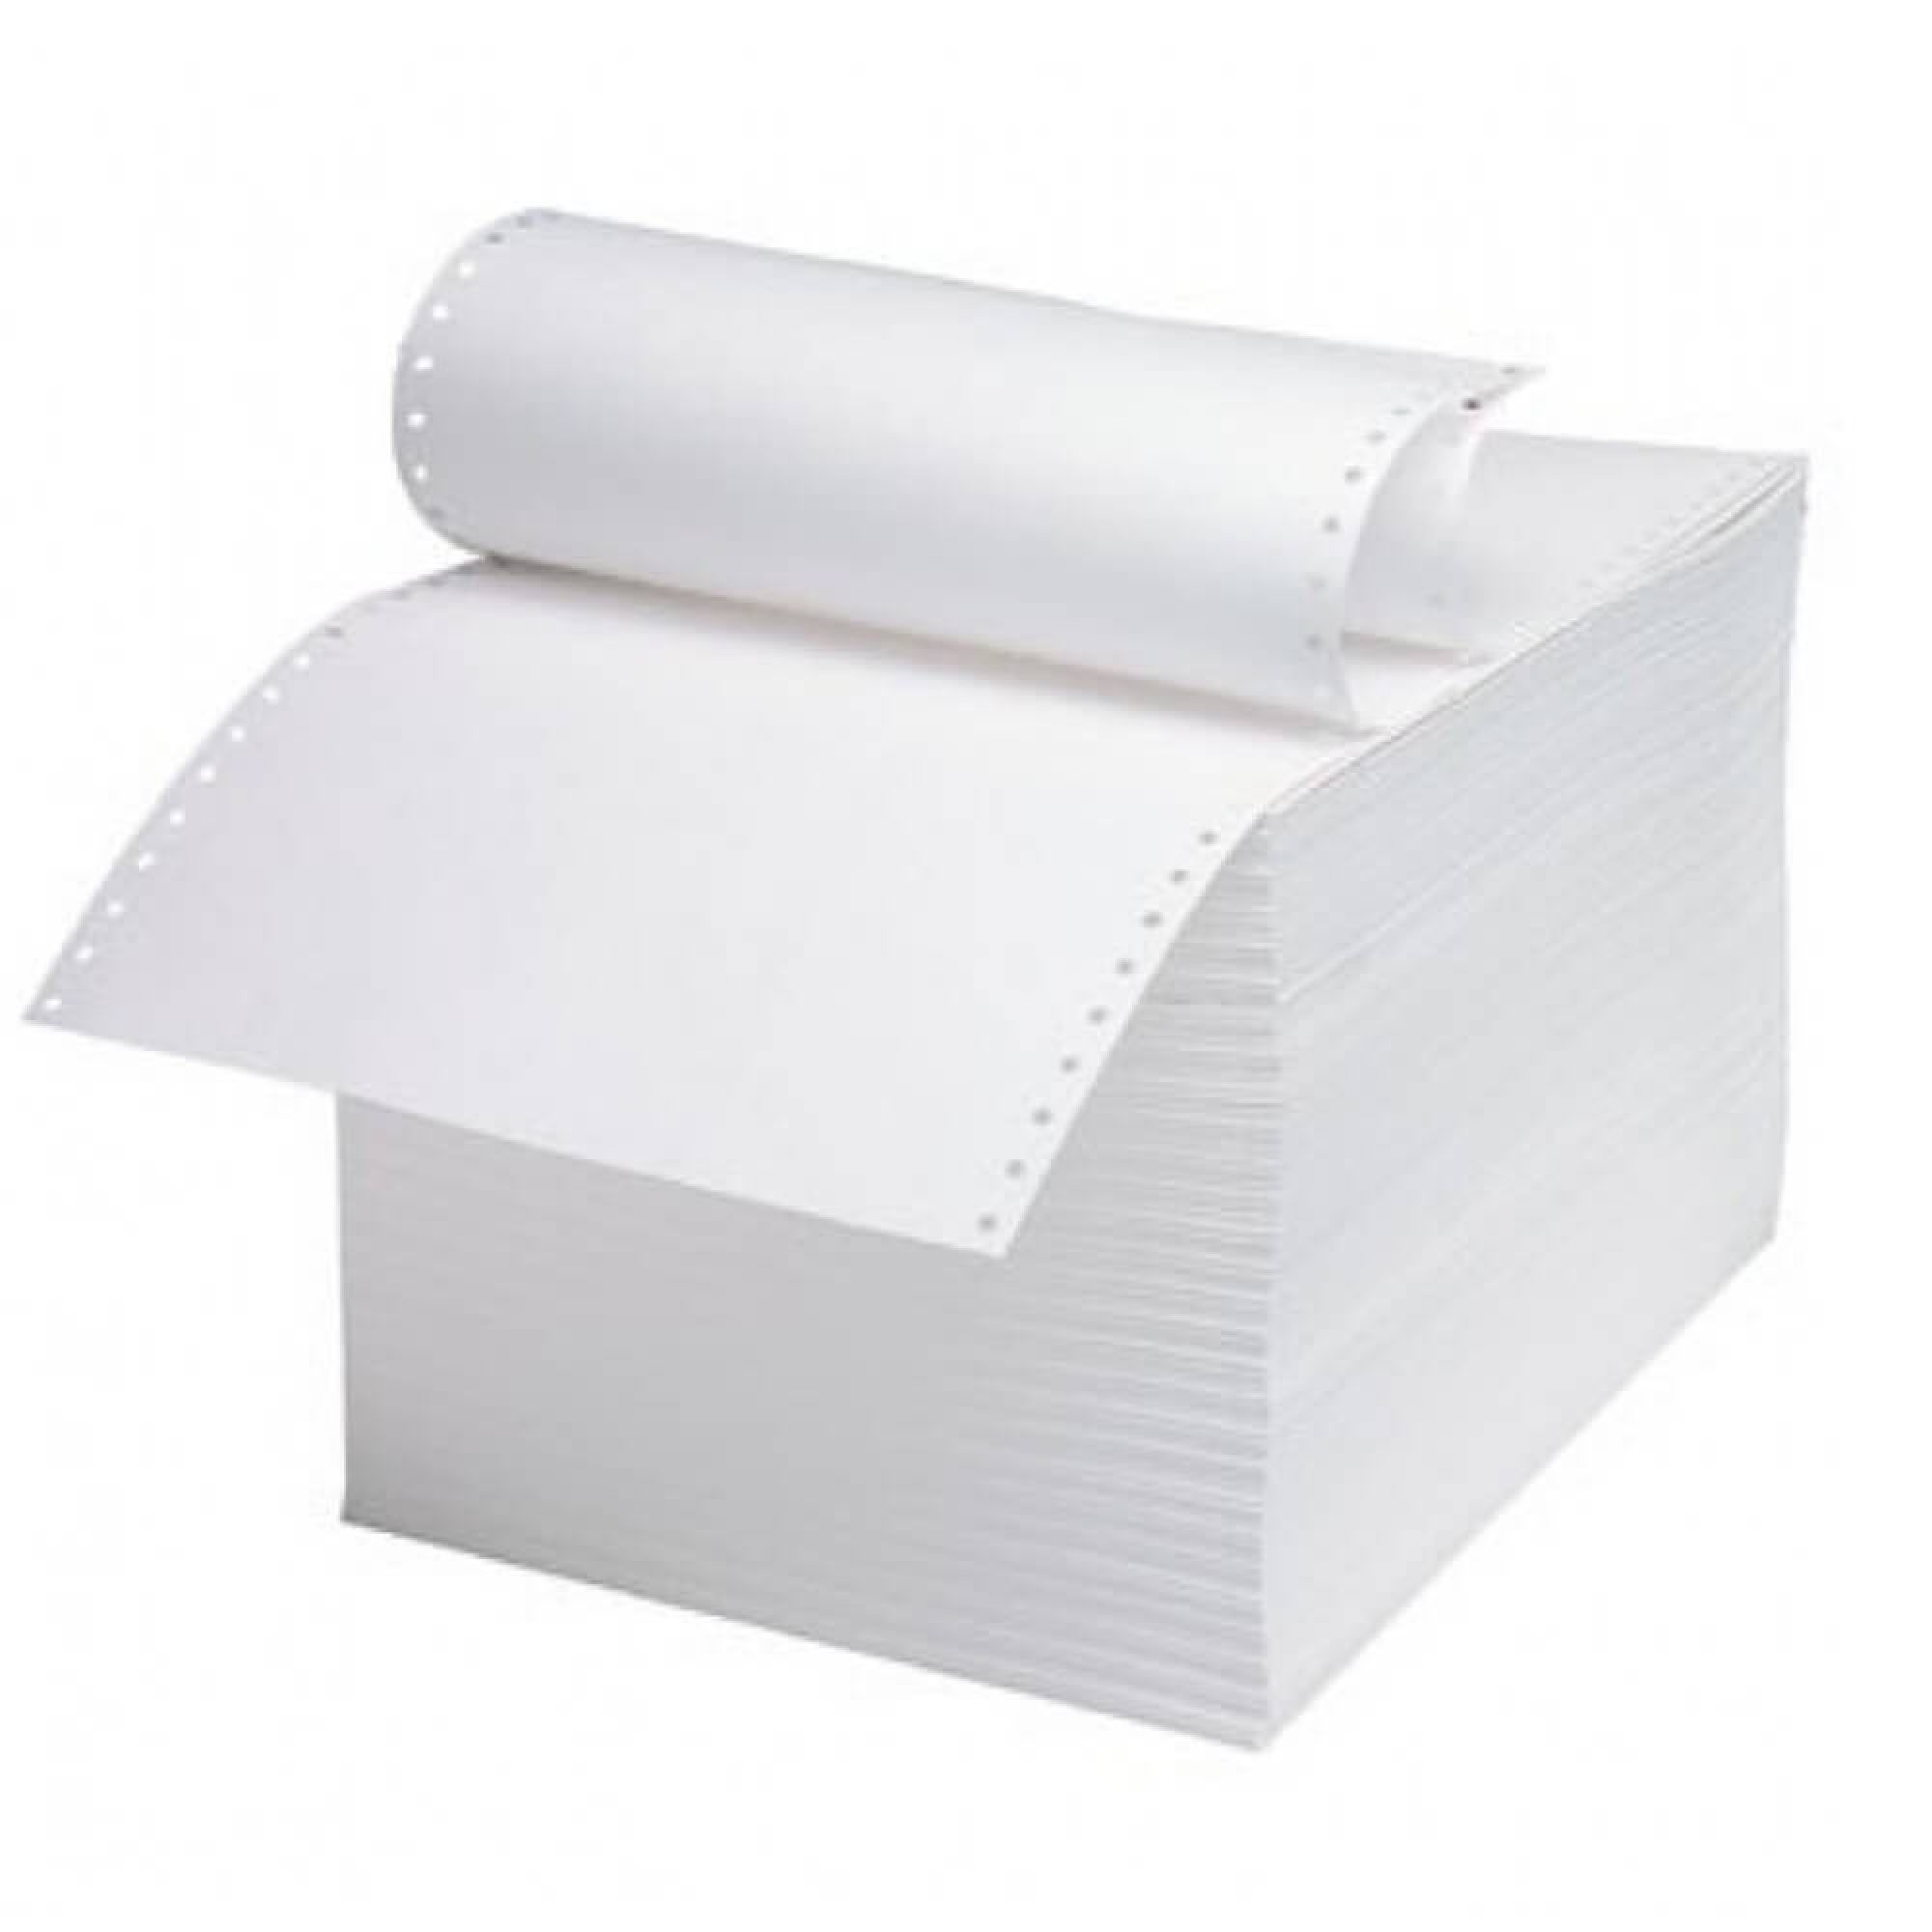 Hartie imprimanta matriceala A4 2 exemplare alb/alb 900 seturi/cutie sanito.ro